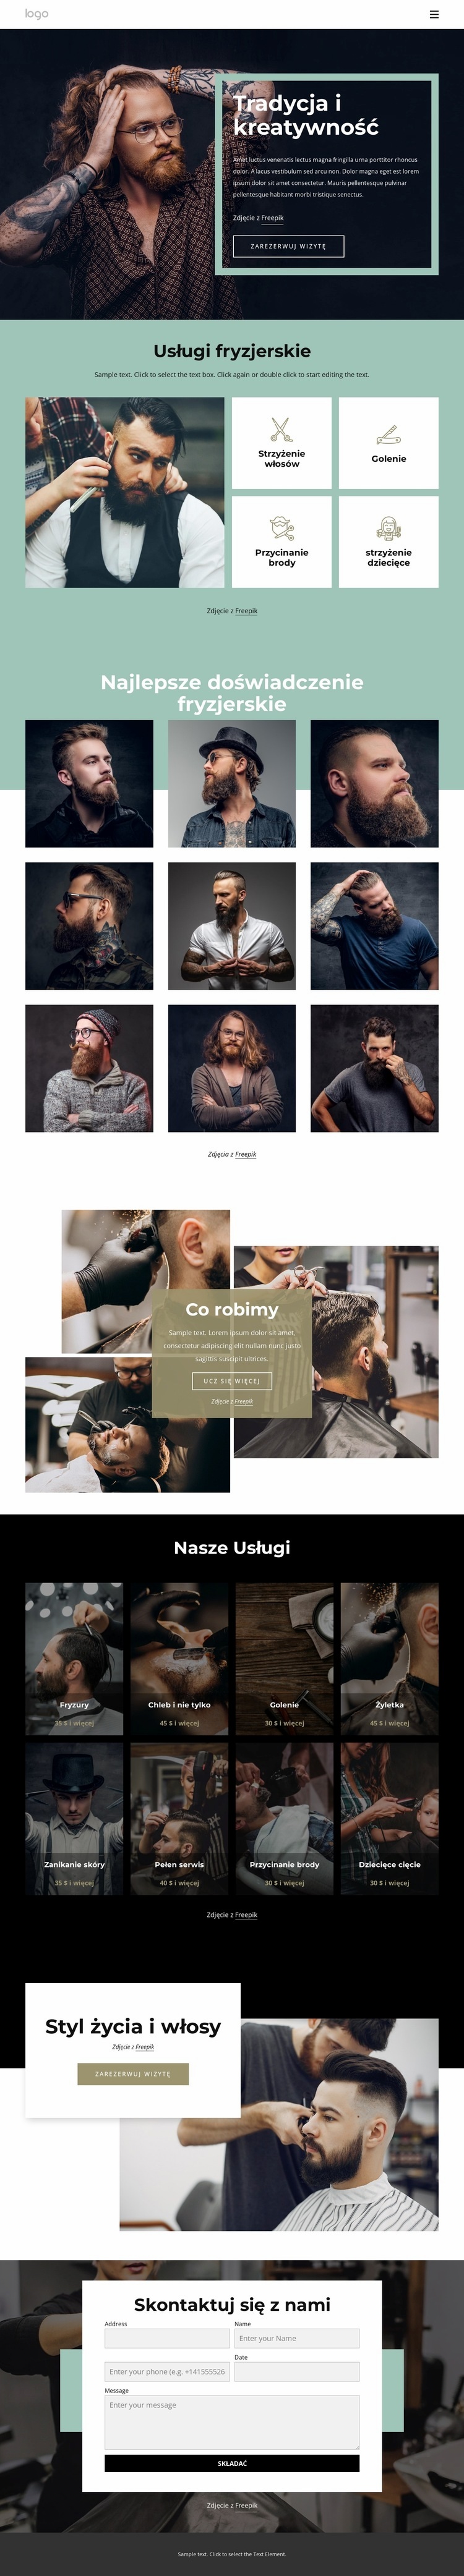 Ogólnodostępny salon fryzjerski Szablon HTML5